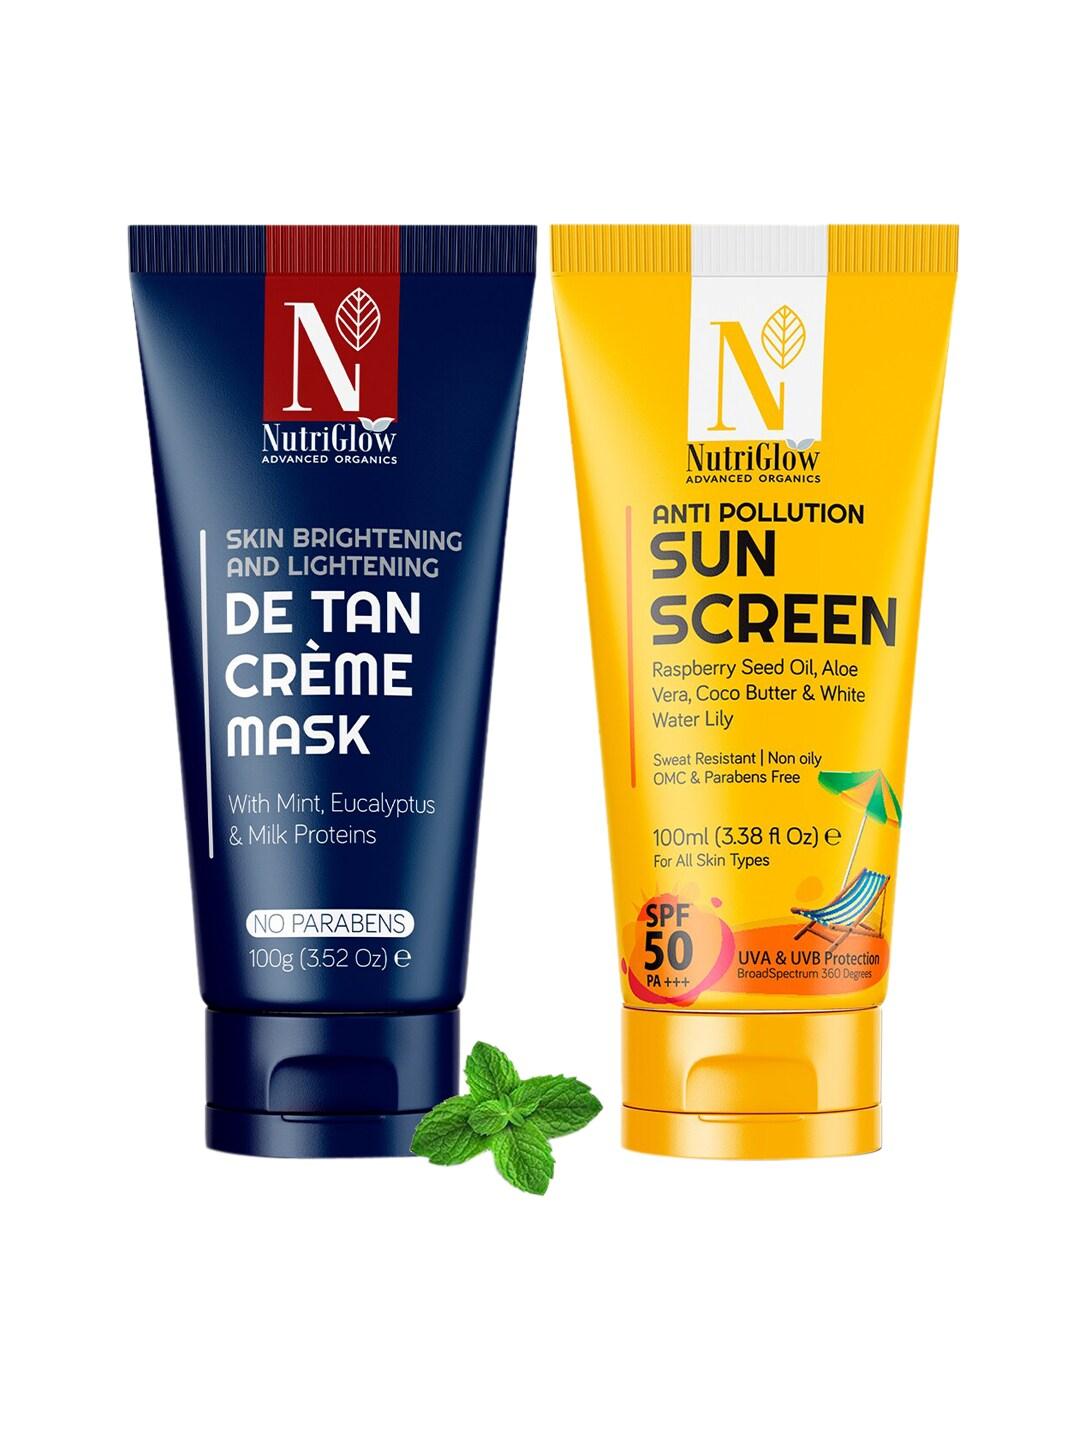 Nutriglow Advanced Organics Set Of 2 Sustainable De Tan Mask & Sunscreen SPF 50 PA+++, 100ml Each